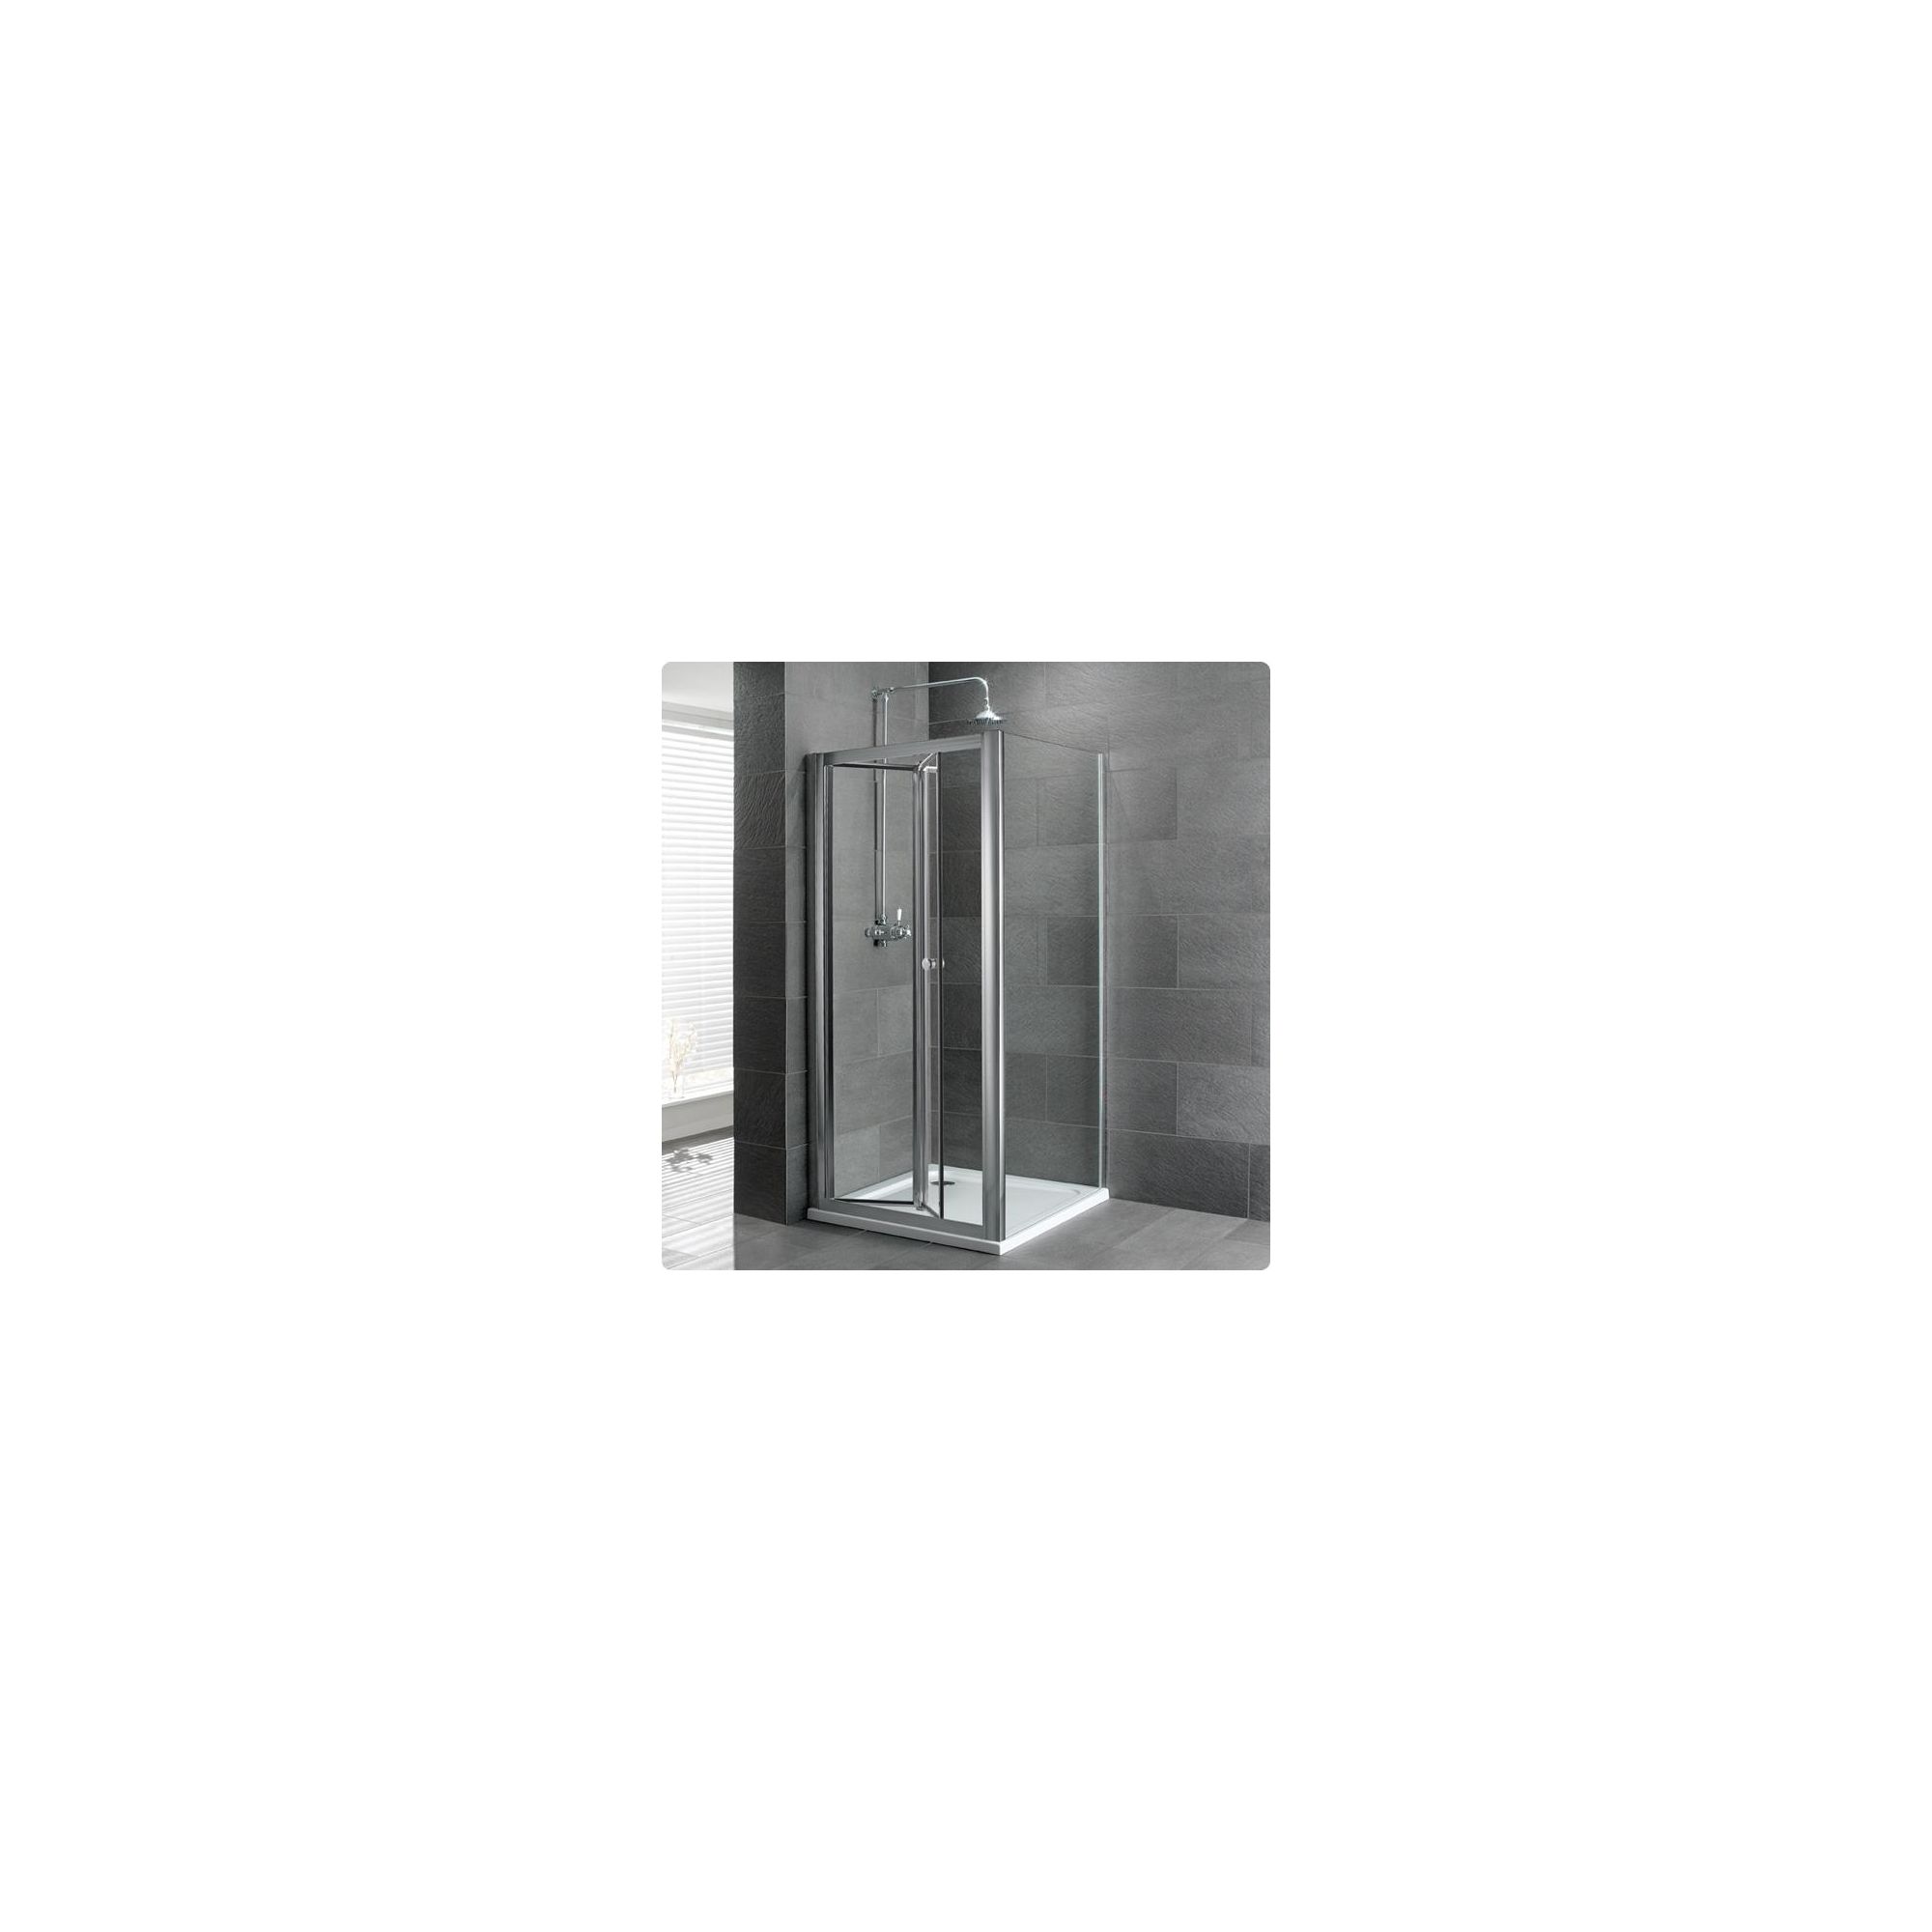 Duchy Select Silver Bi-Fold Door Shower Enclosure, 800mm x 700mm, Standard Tray, 6mm Glass at Tesco Direct